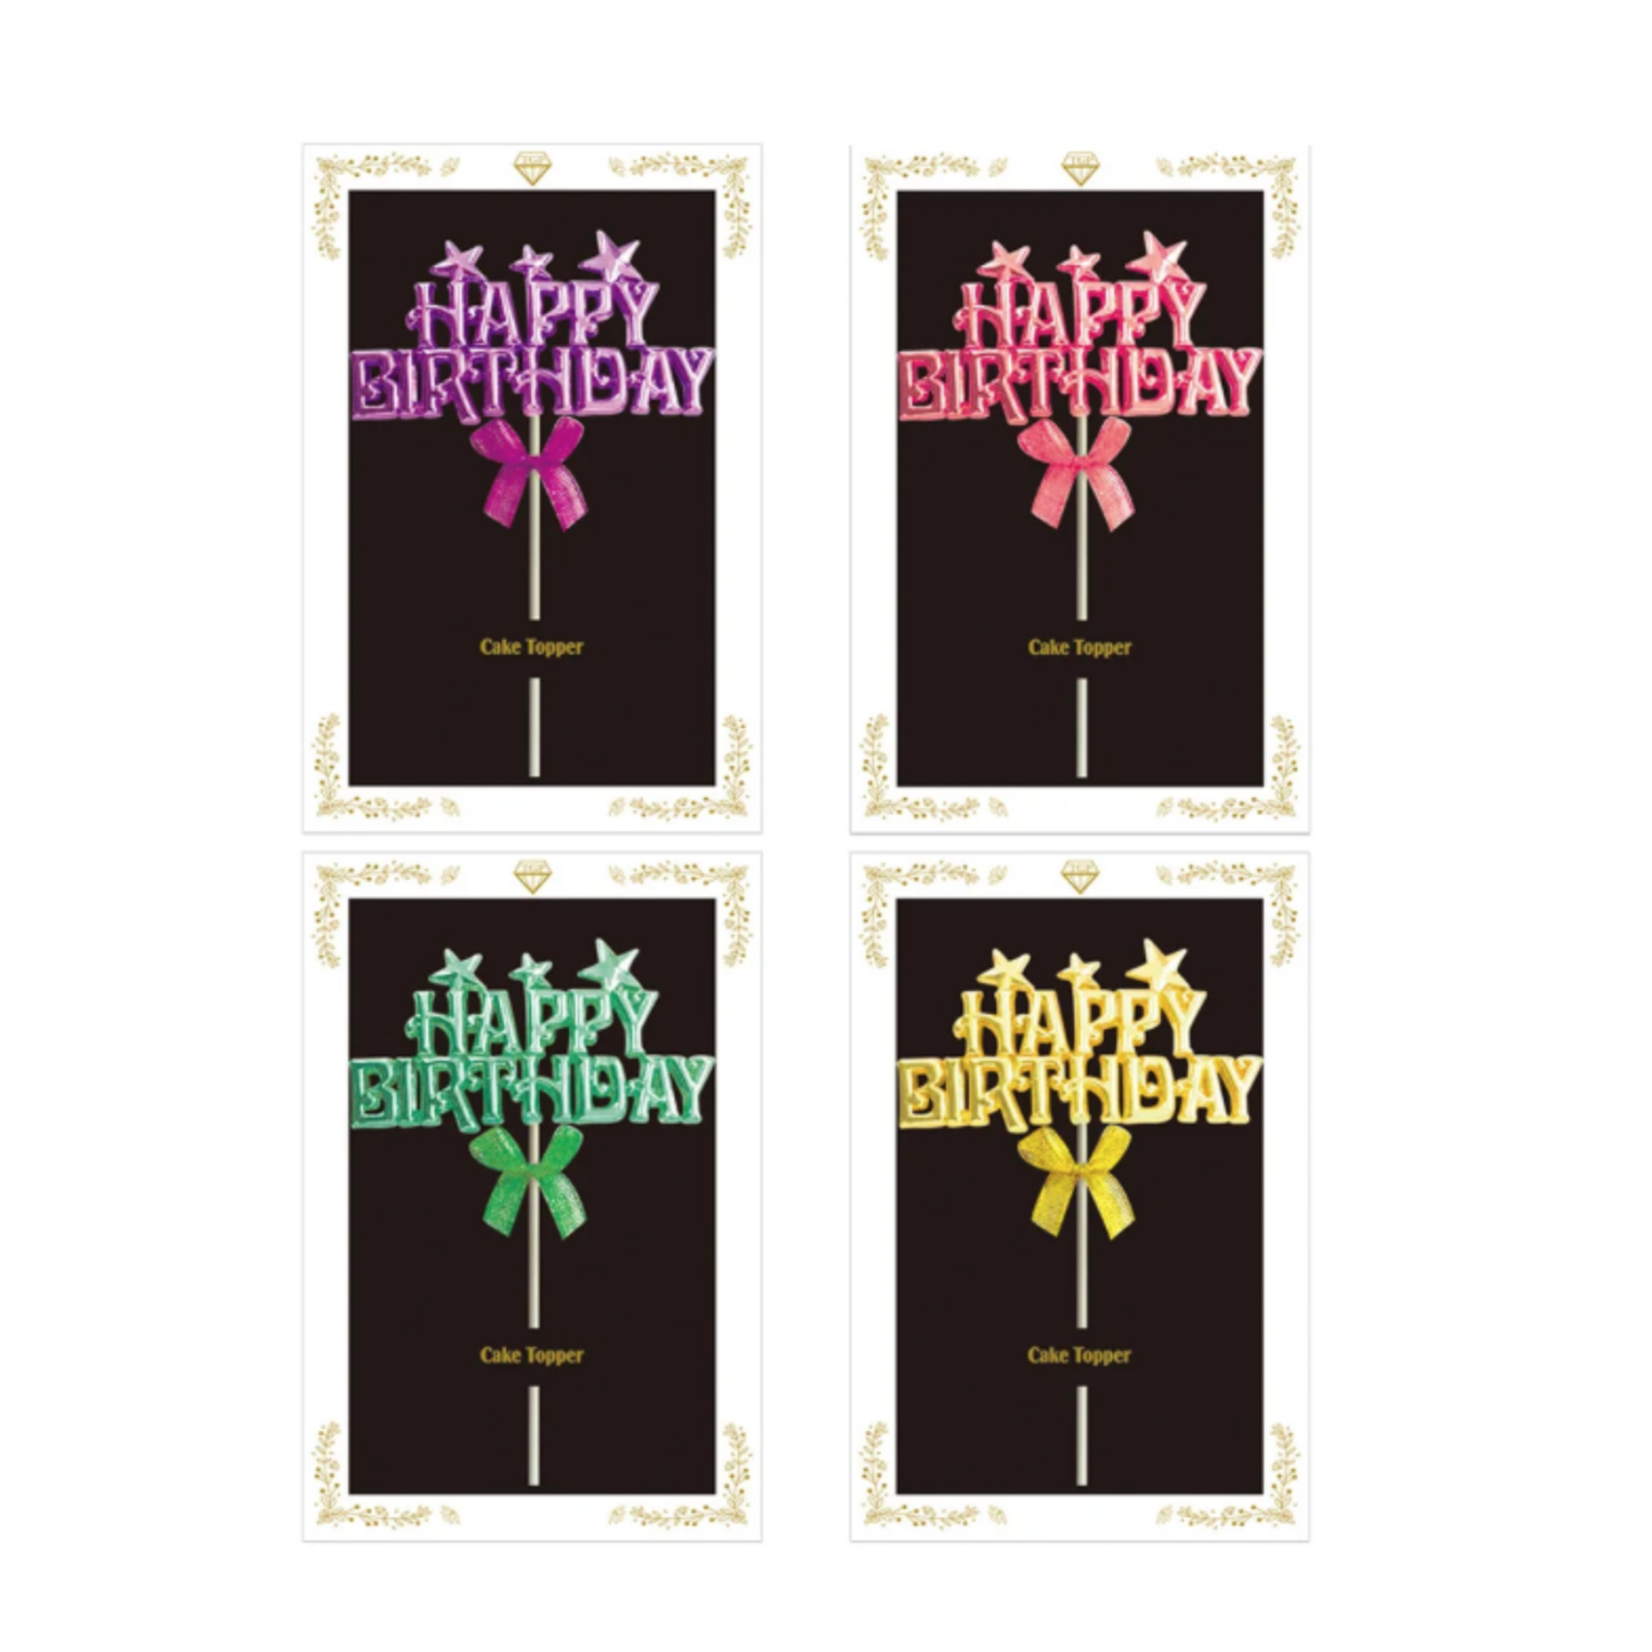 GLOW IN THE DARK CAKE TOPPER “HAPPY BIRTHDAY” (PRICE PER EACH, BOX HAS ASSORTMENT)